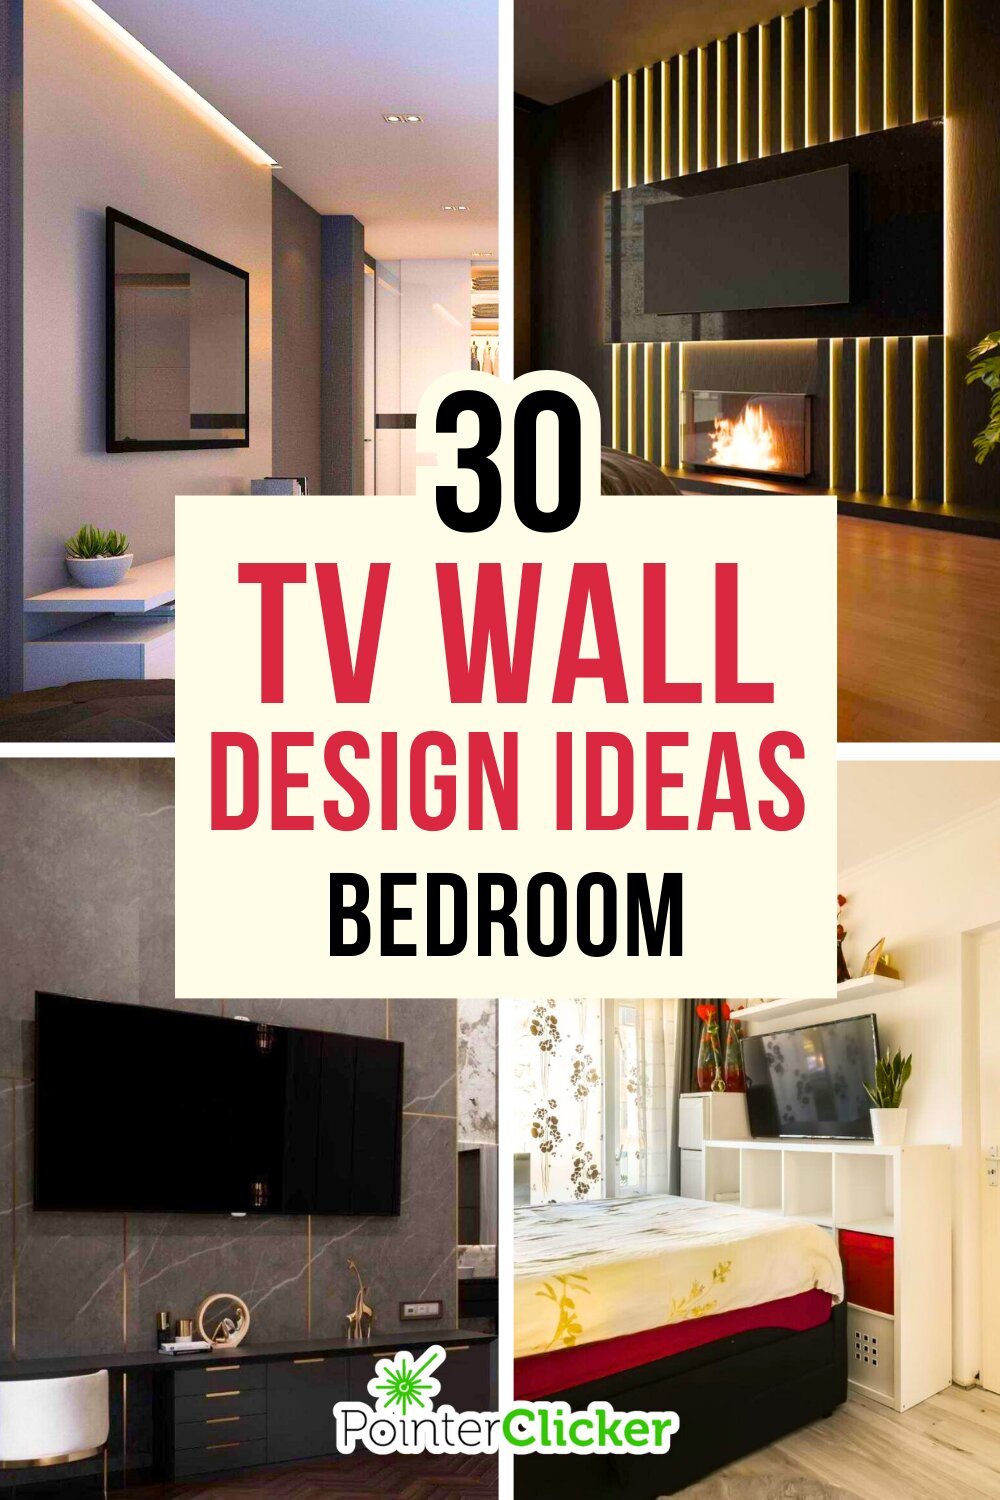 30 tv wall design ideas for bedroom